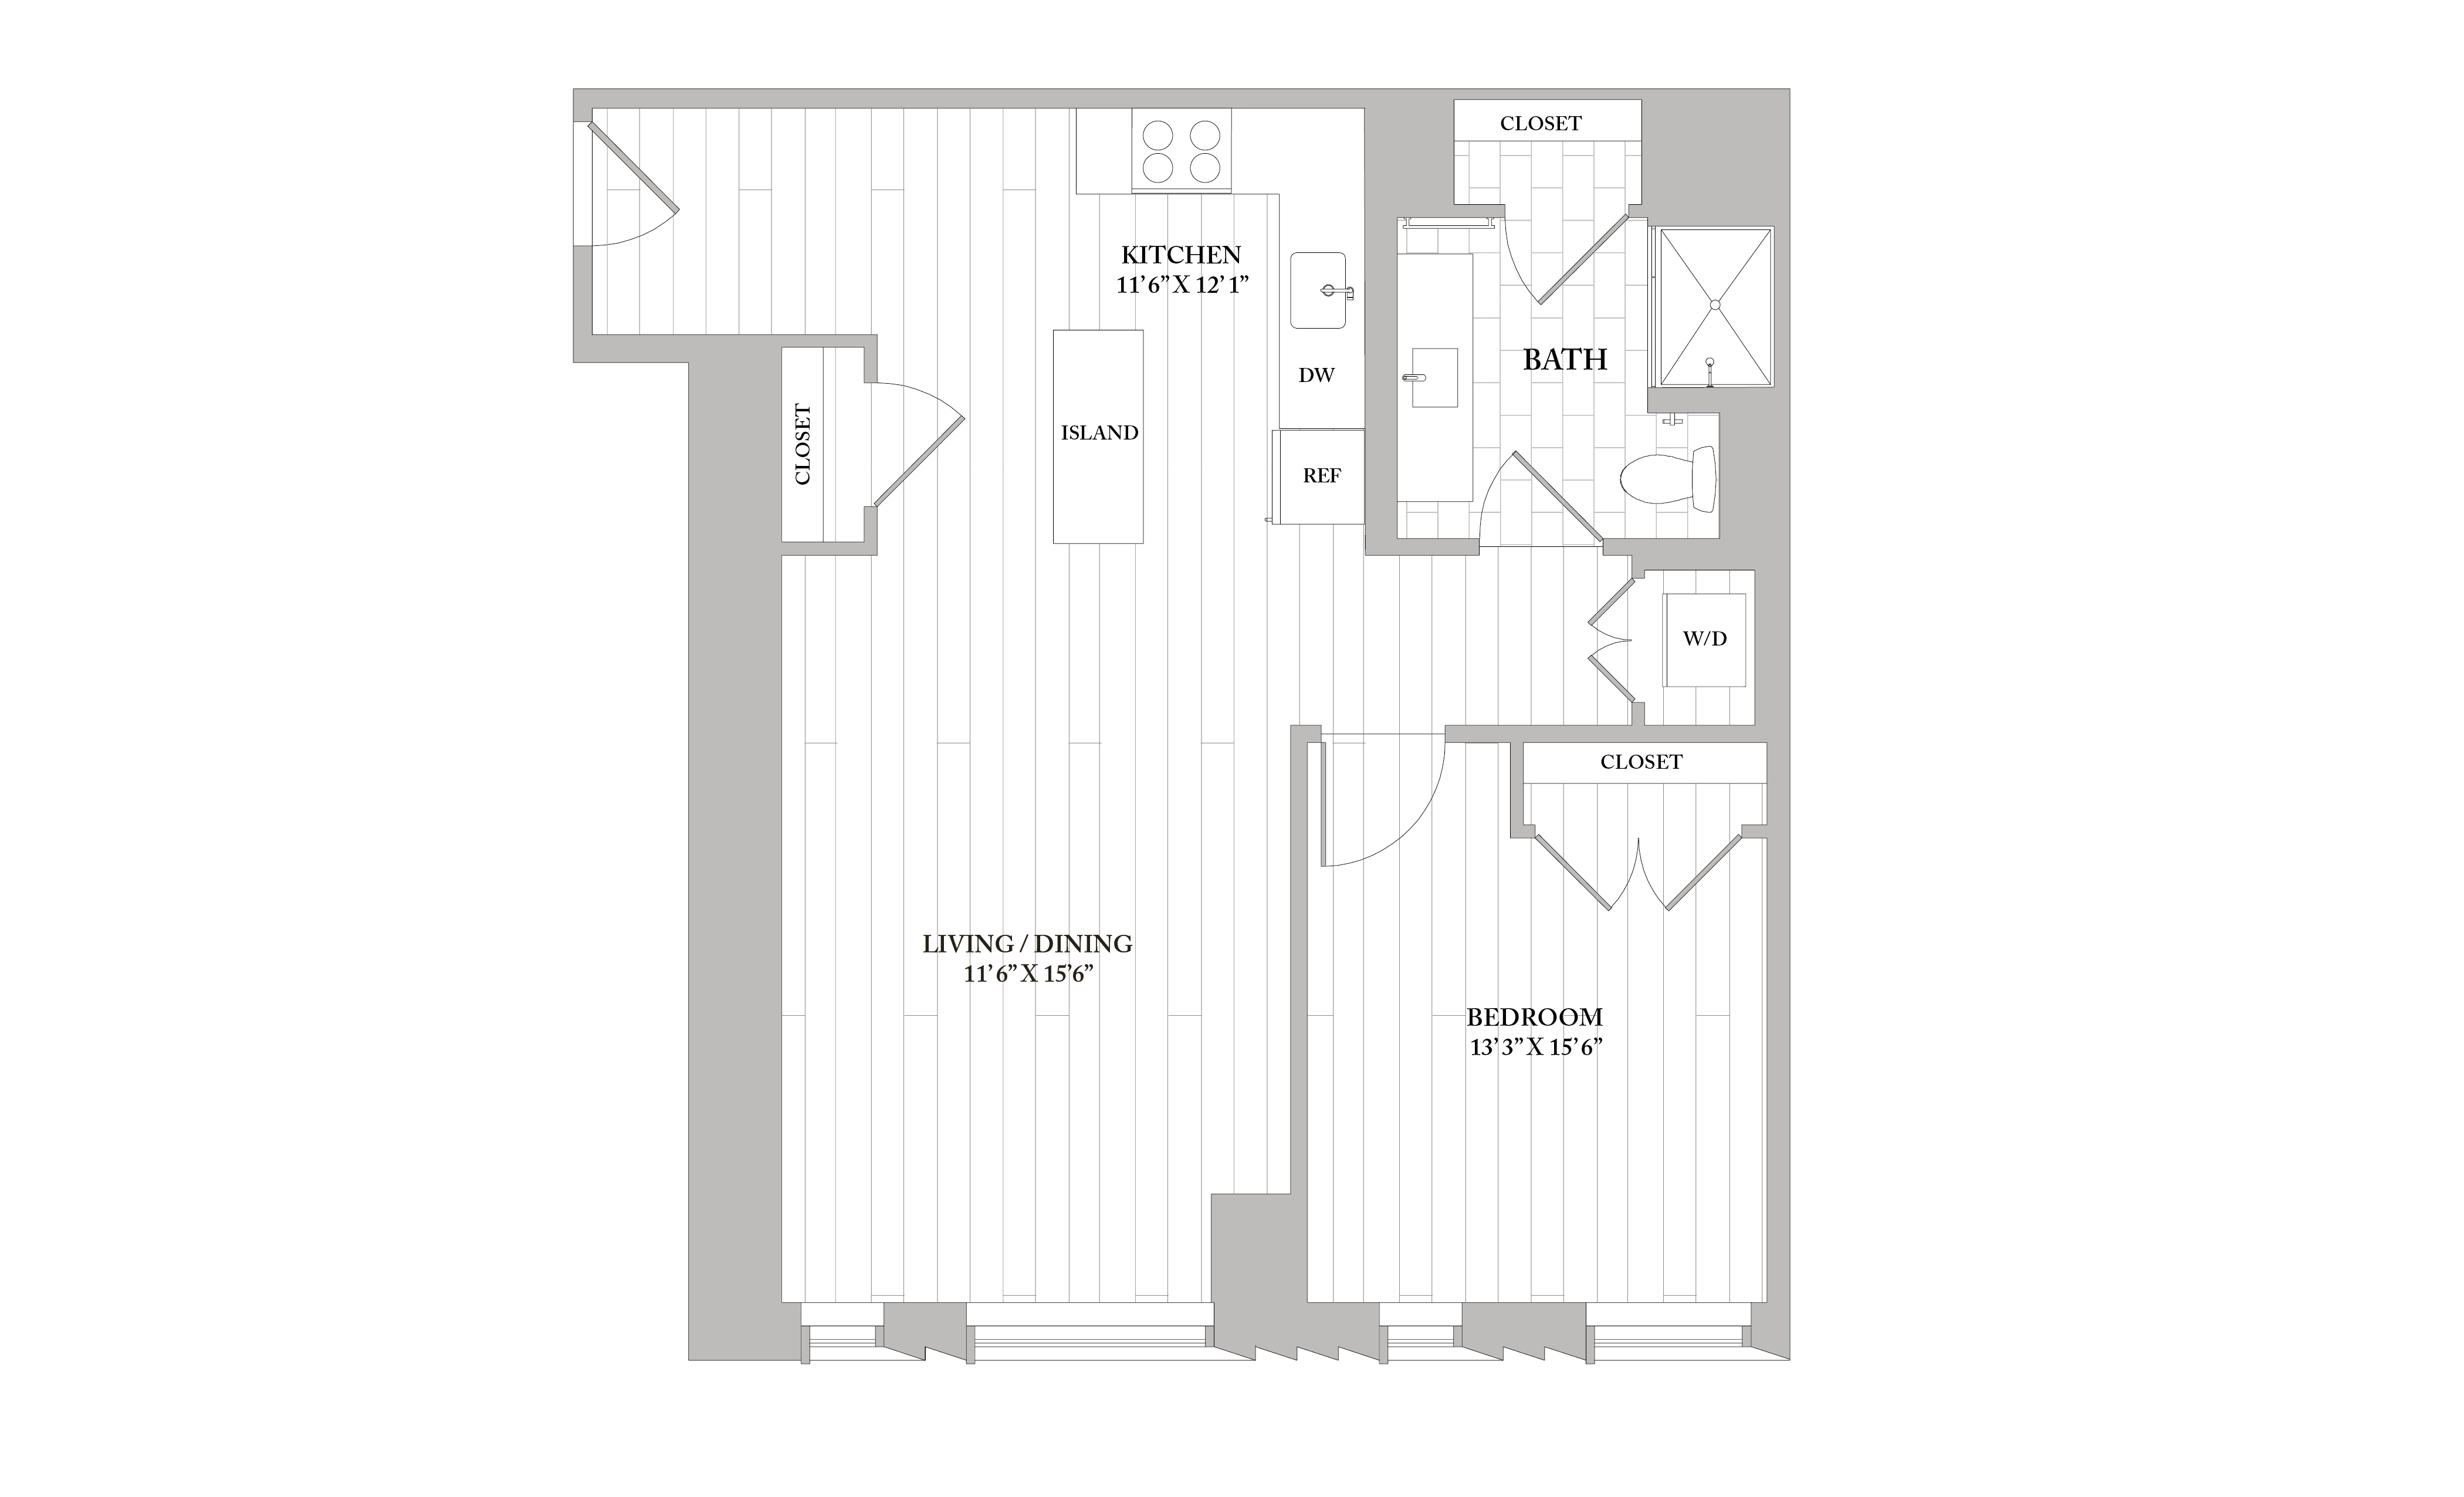 Apartment 2507 floorplan